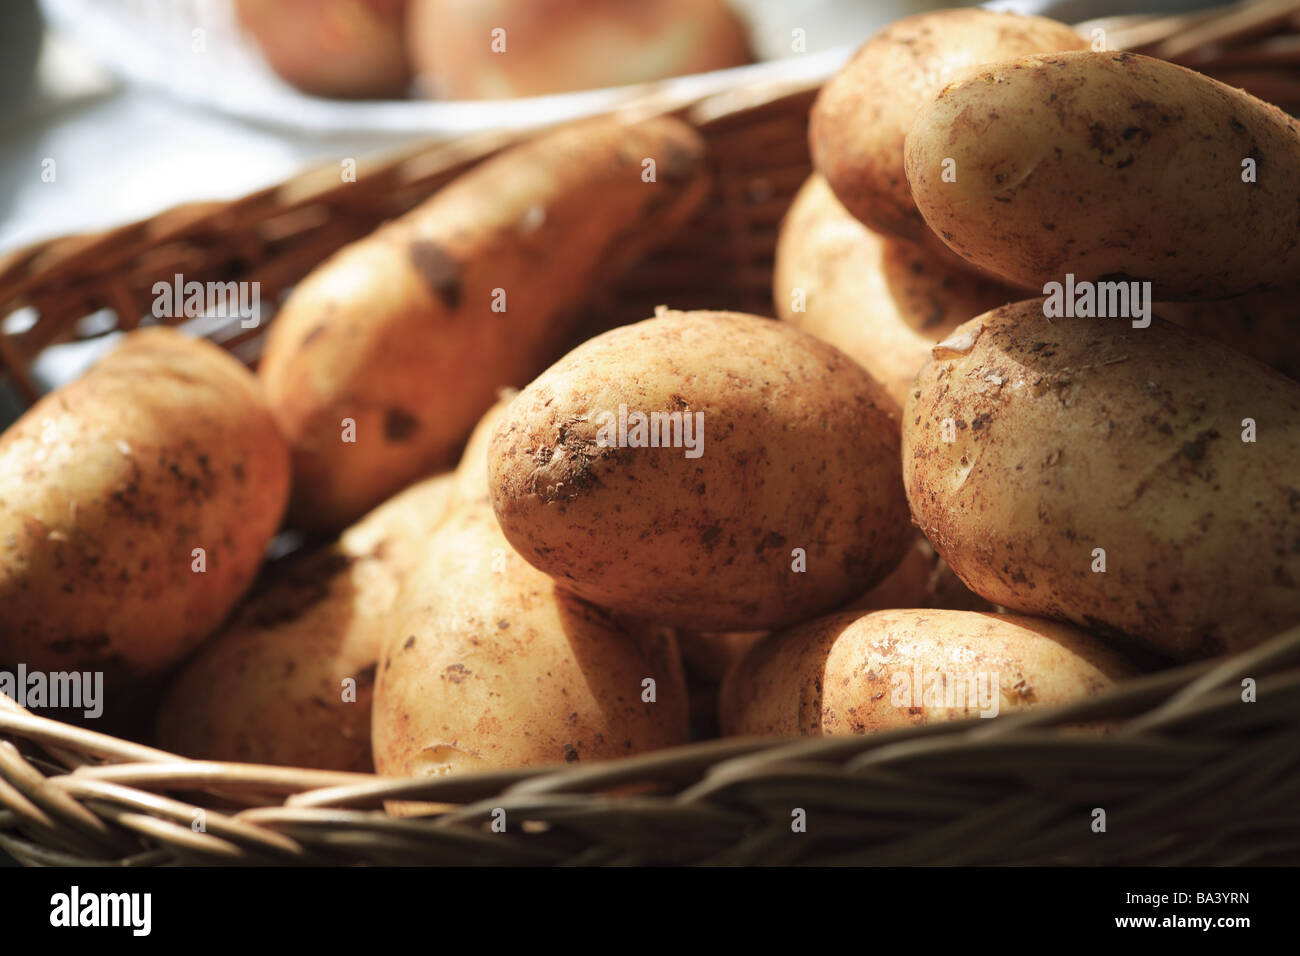 Korb Kartoffeln grob Solanums Gemüse Solanum Tuberosum Knollen Nahrung symbol stärkehaltige Kohlenhydrate Kartoffel-Stärke leise Stockfoto